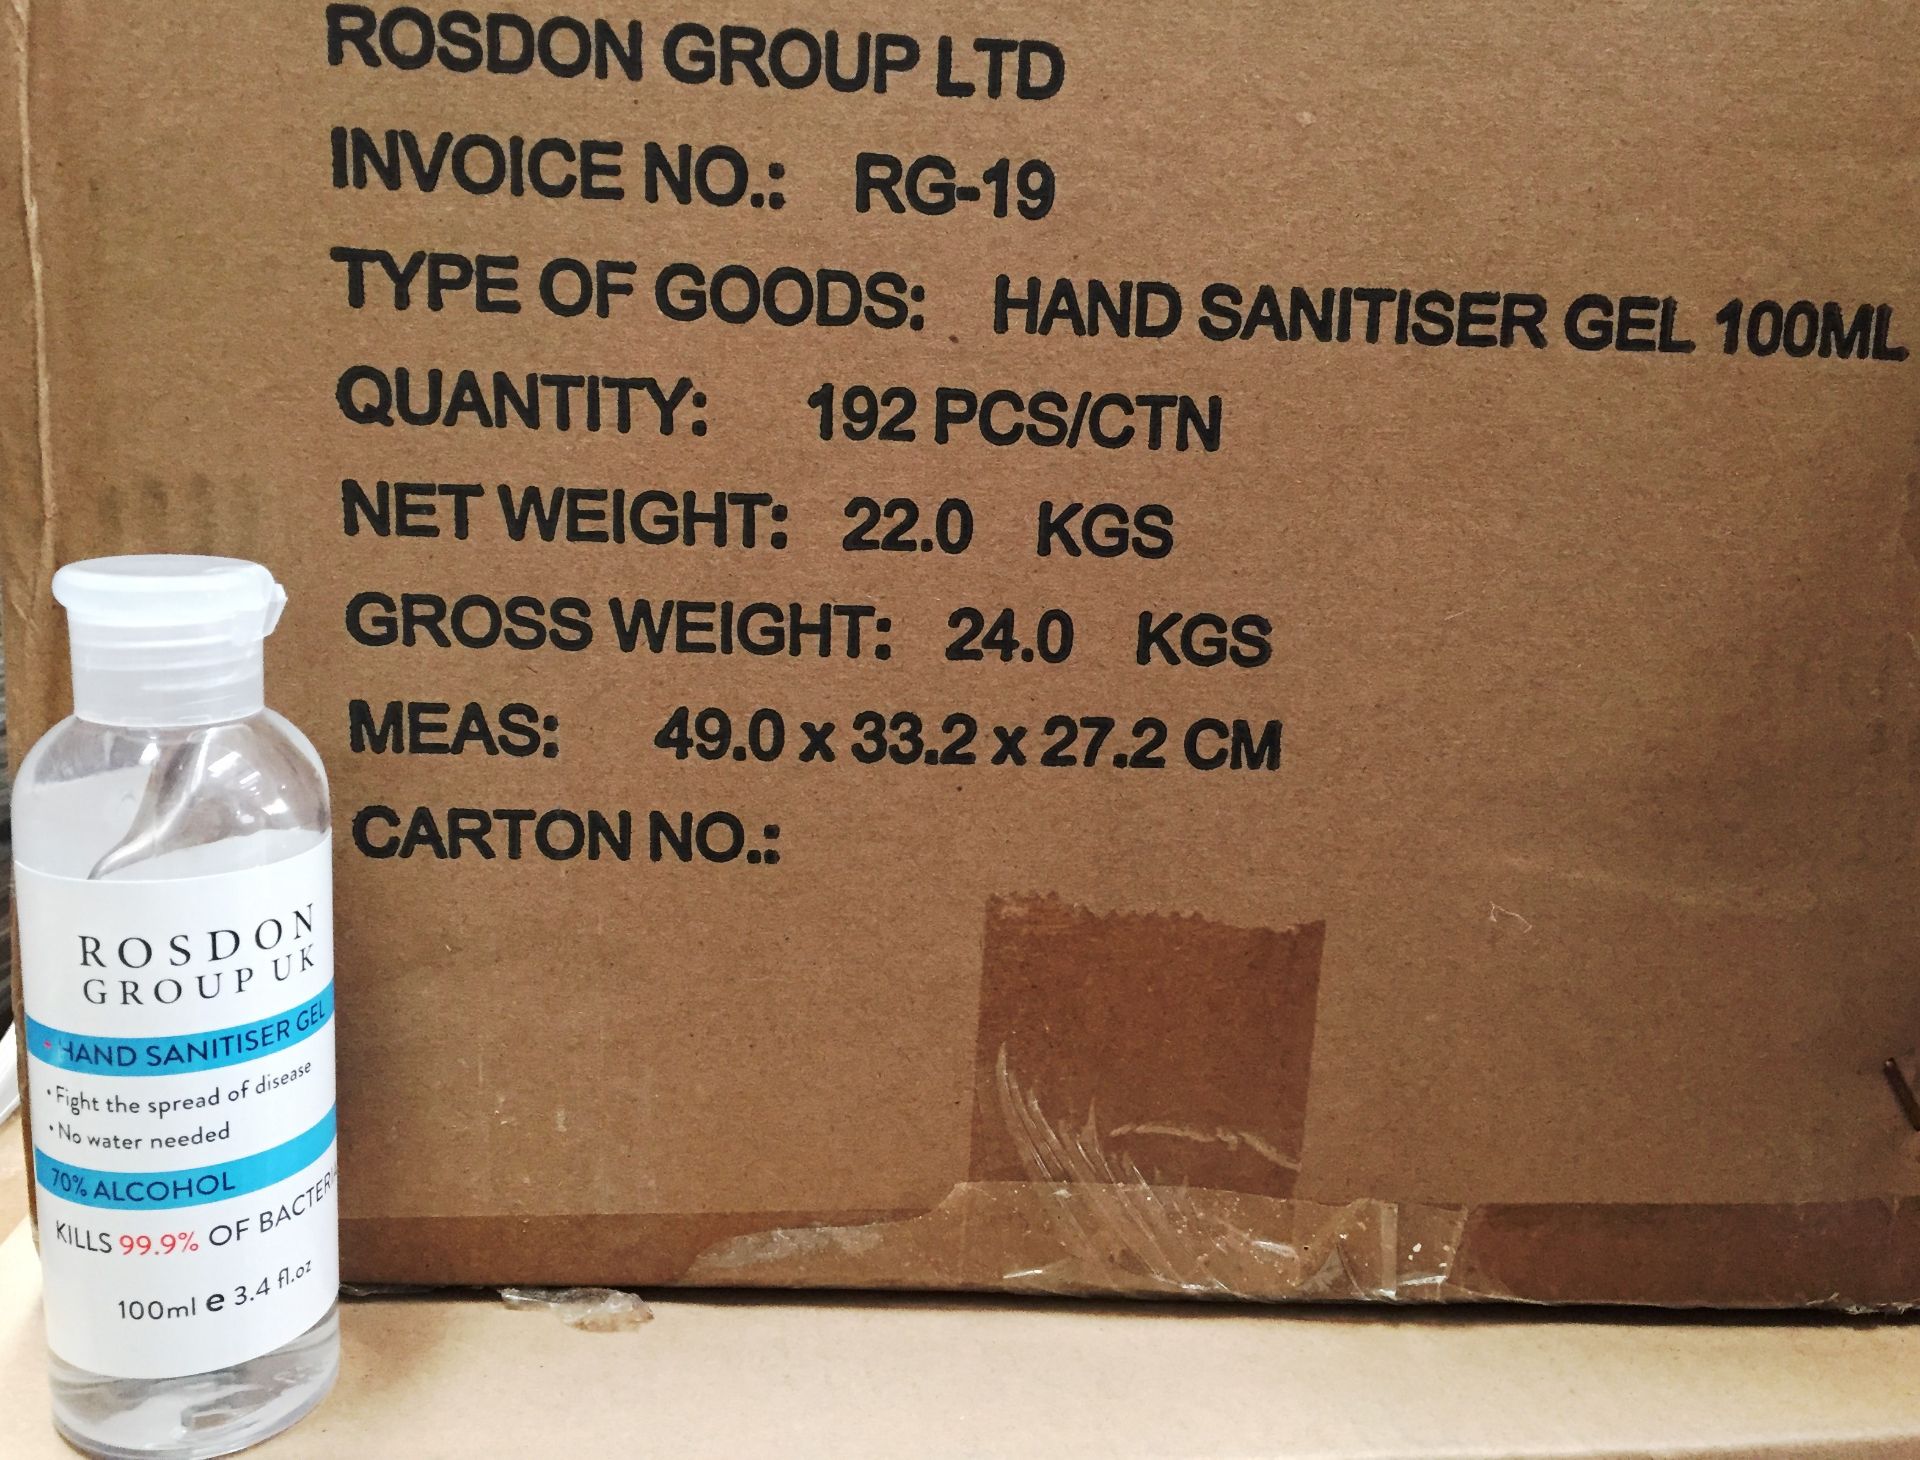 2 x boxes Rosdon Group Ltd 100ml hand sanitiser (384 units per 2 boxes) - Image 3 of 3